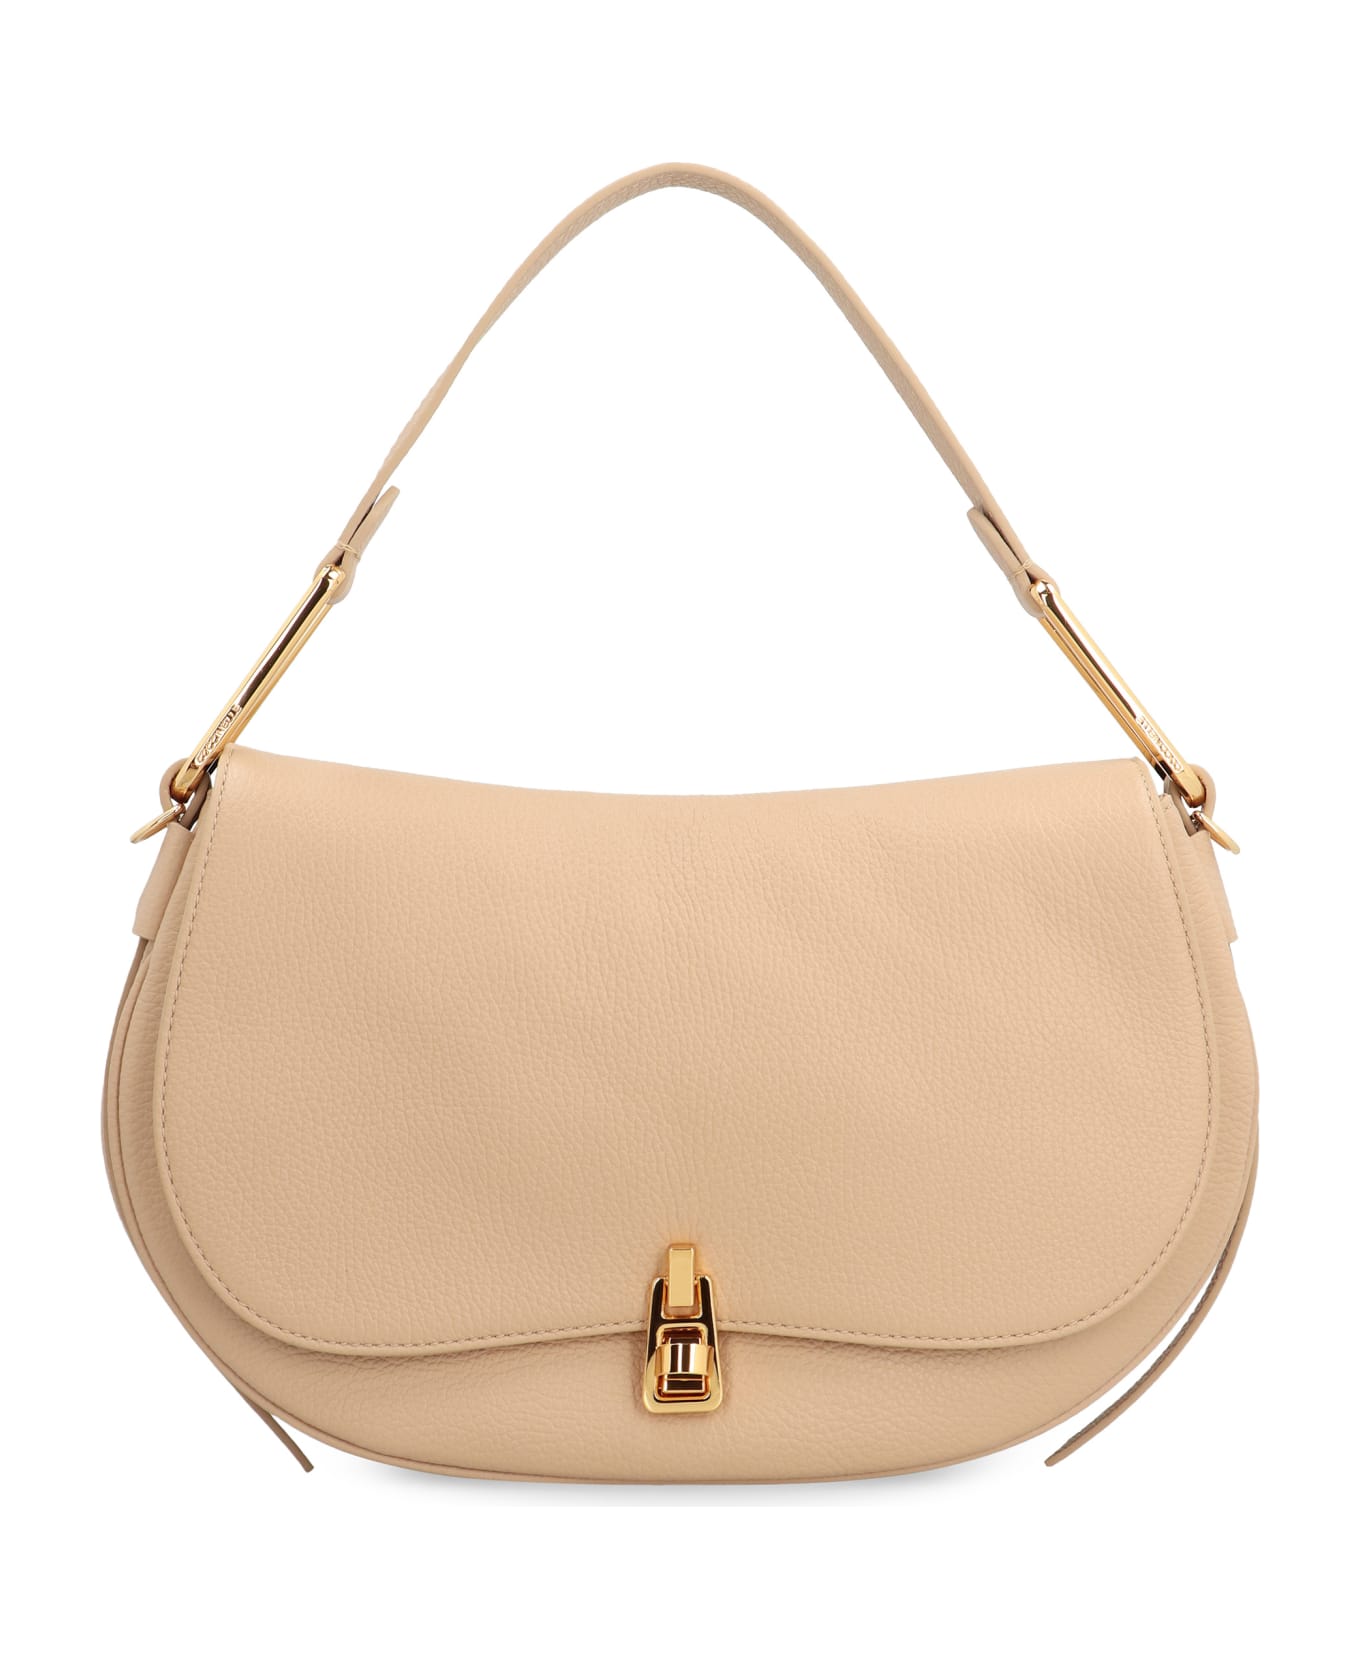 Coccinelle Magie Soft Leather Handbag - Beige